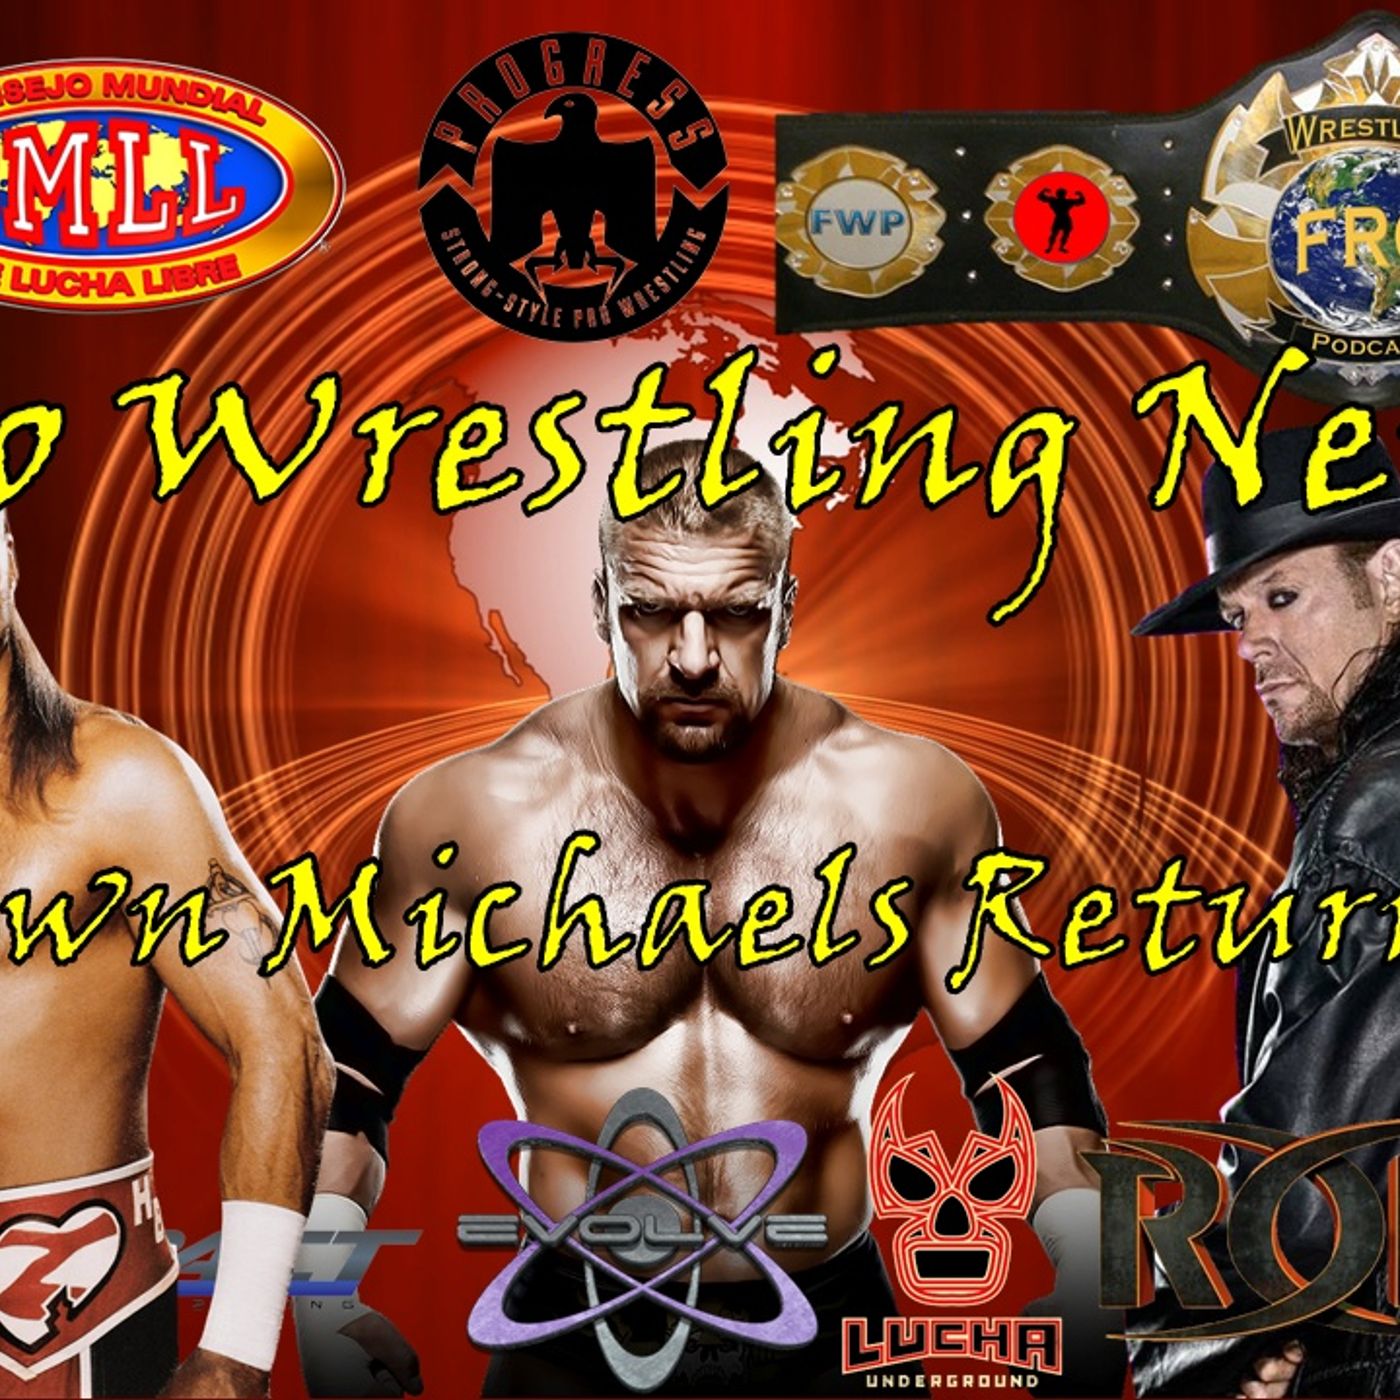 Fro Wrestling News - Shawn Michaels Returning?